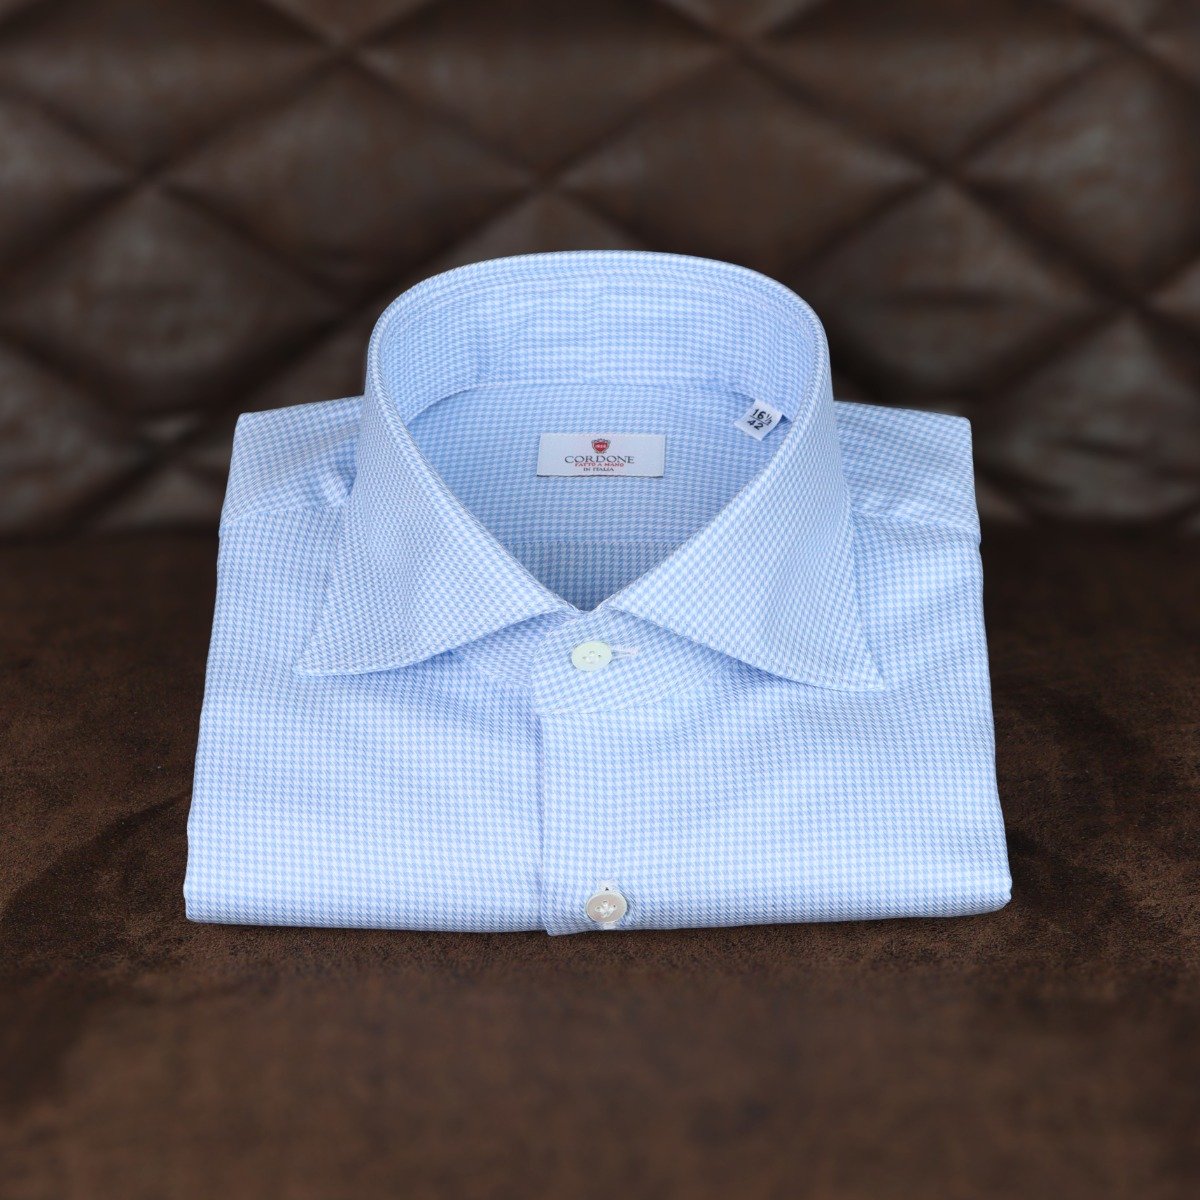 Top 5 men's dress shirts - Blue checked dress shirt